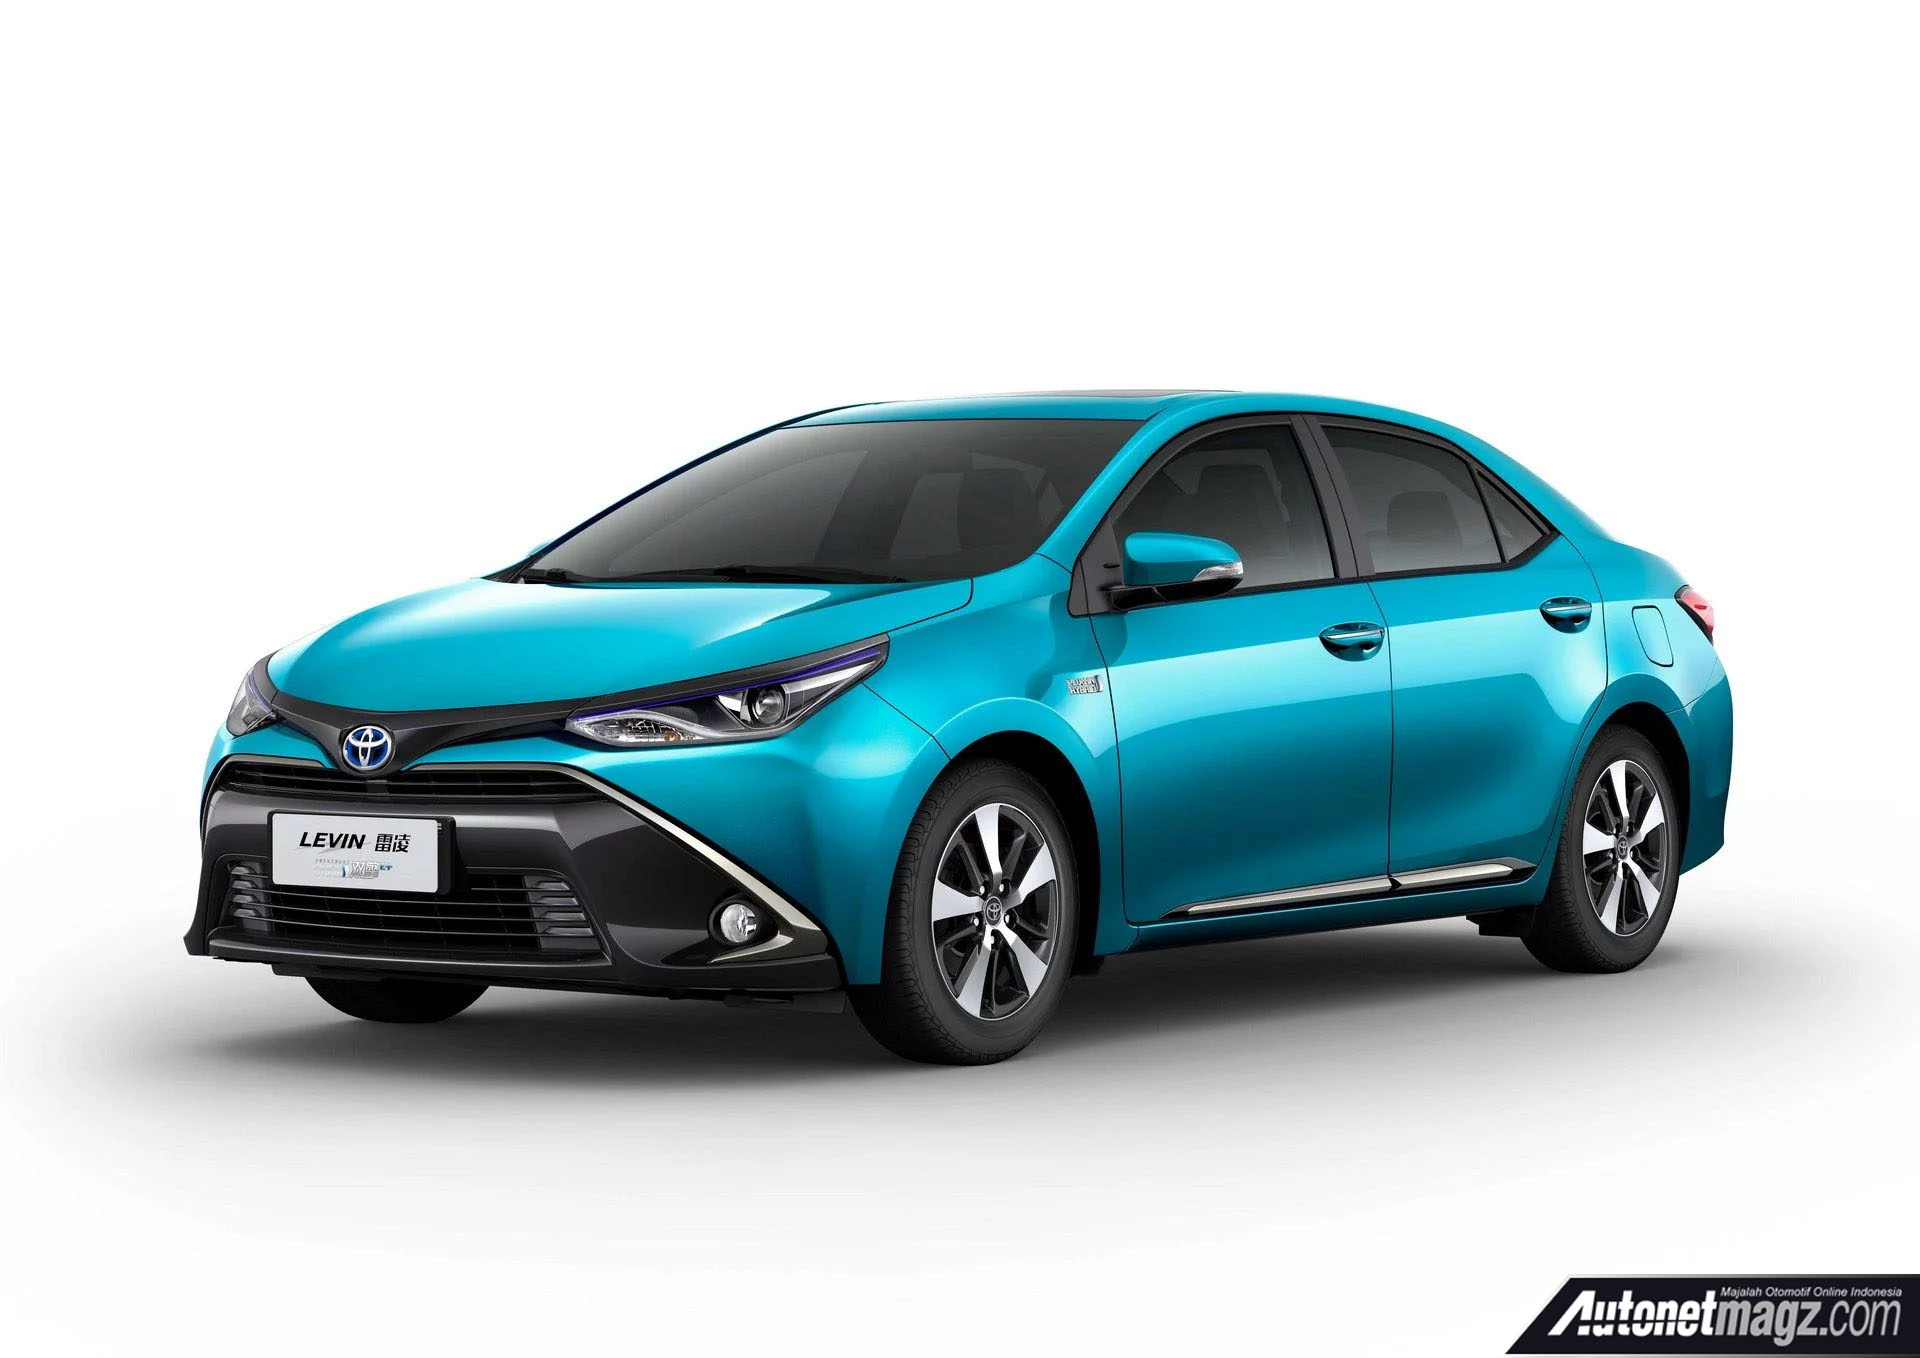 Berita, Toyota Levin PHEV China: Toyota Perkenalkan Corolla PHEV & Levin PHEV di China